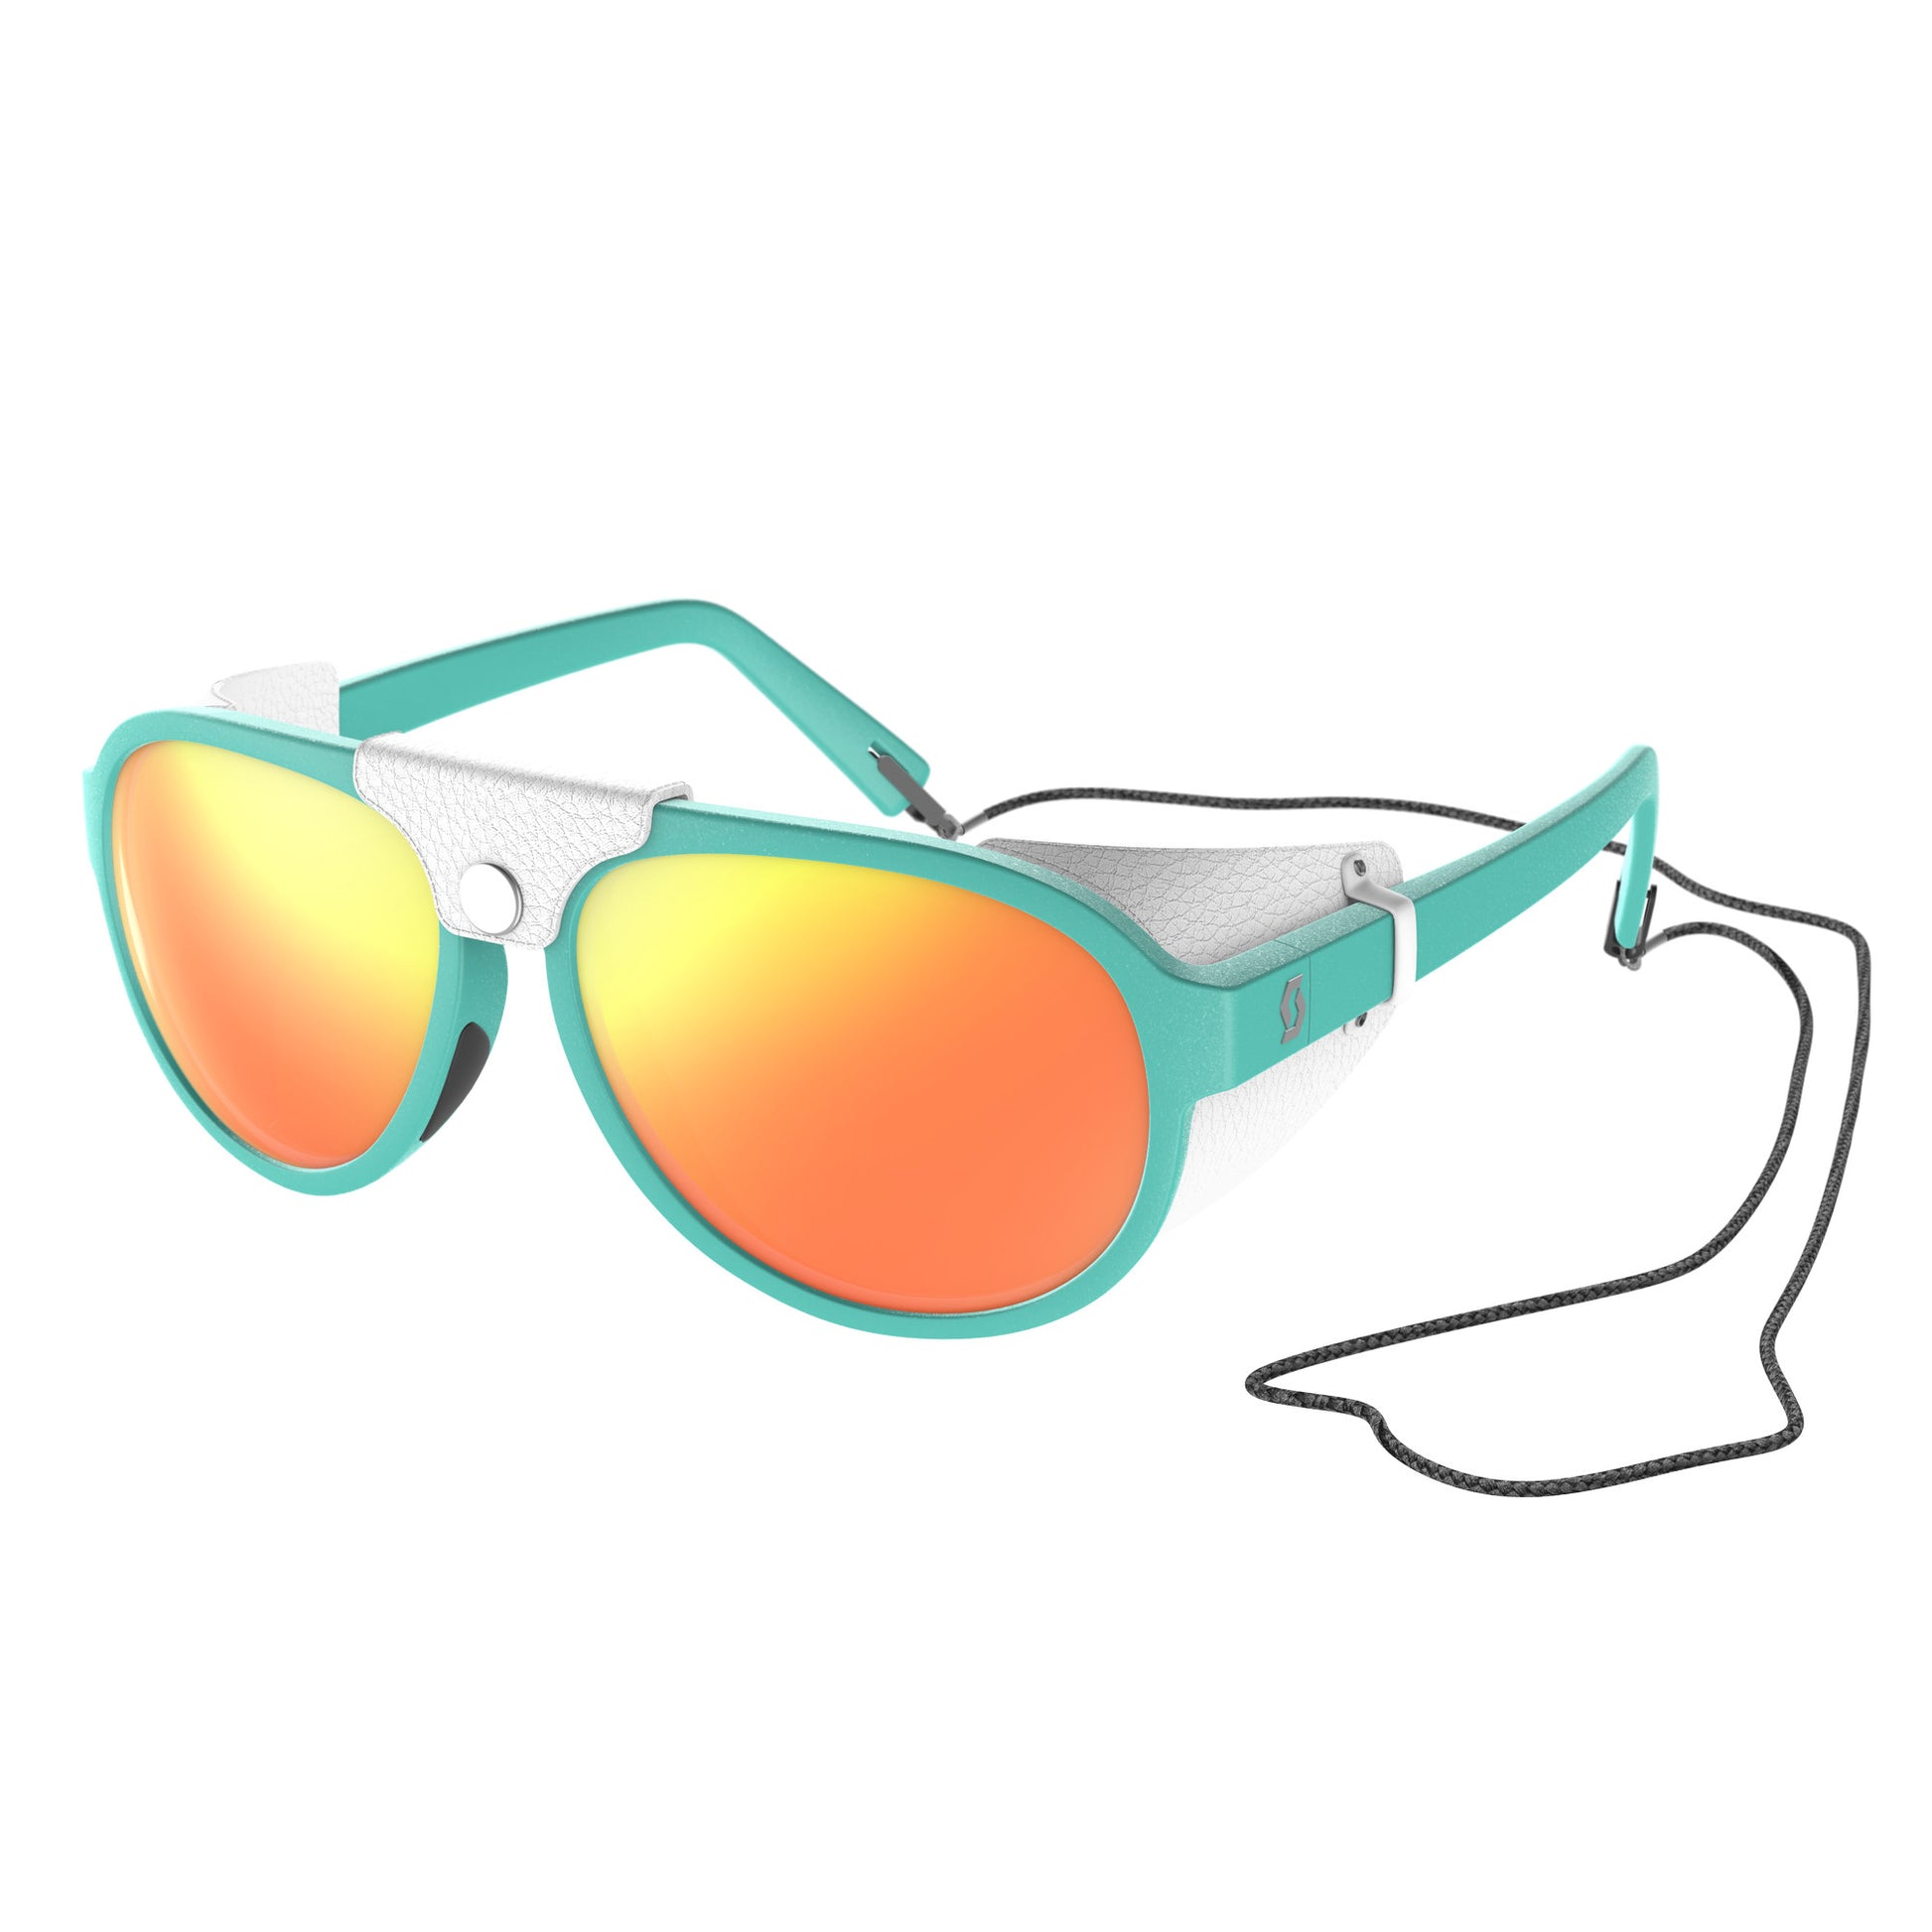 Scott Sunglasses Cervina Teal Blue/White / Red Chrome Sunglasses